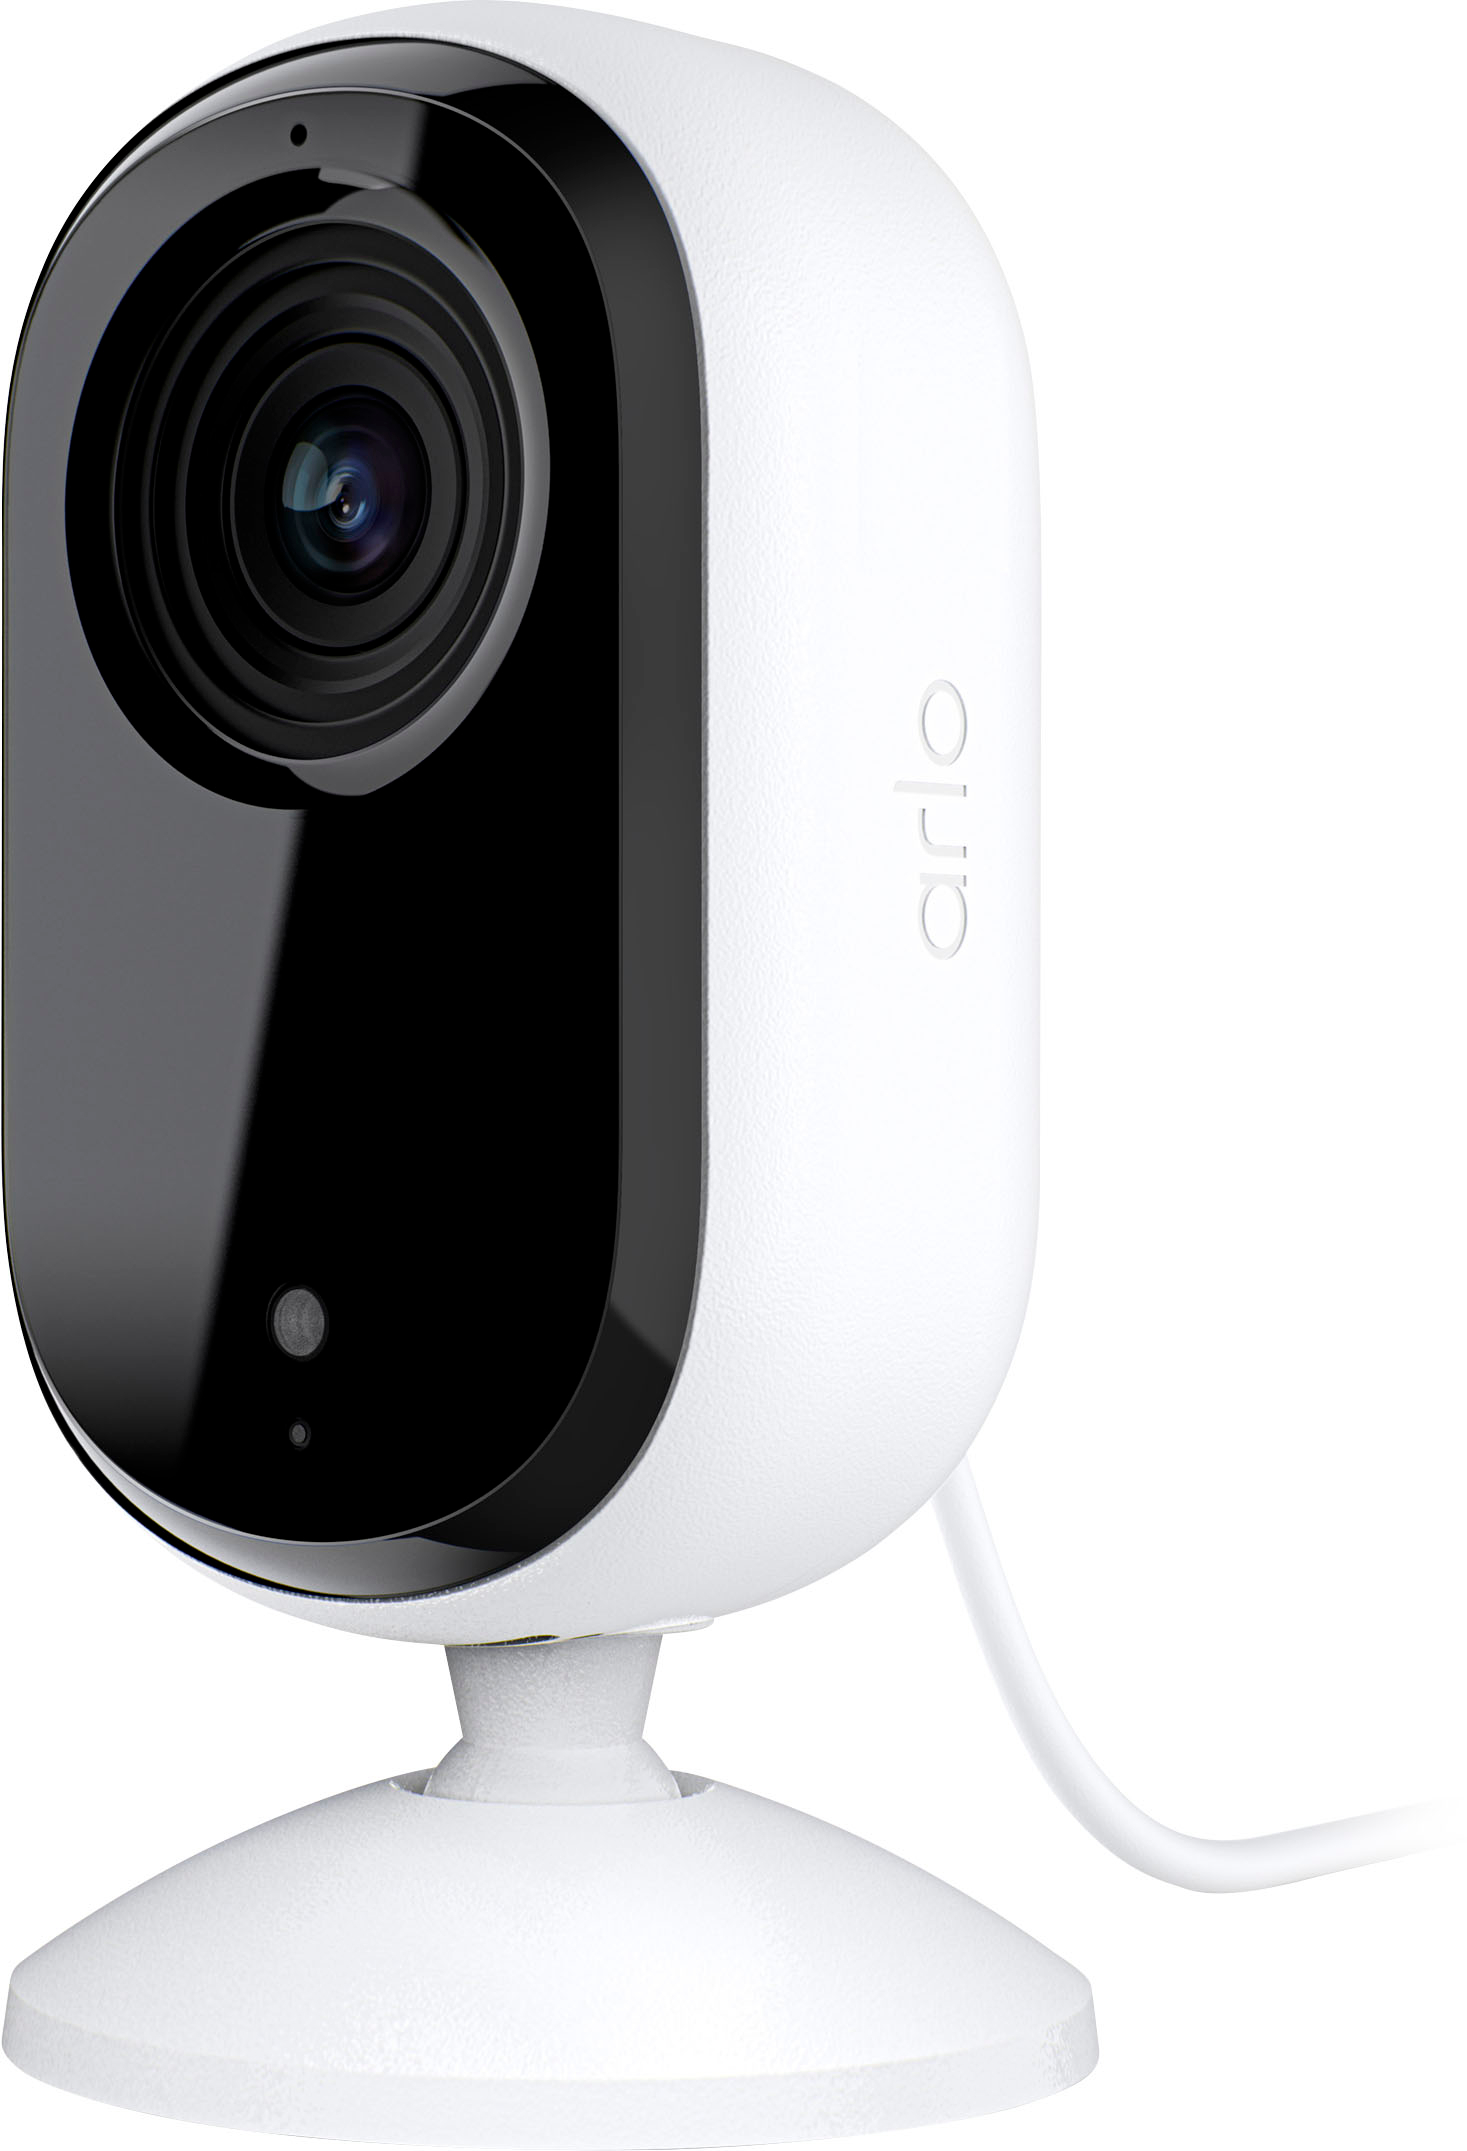 Arlo Pro 2 outdoor security cameras belong on your short list - CNET